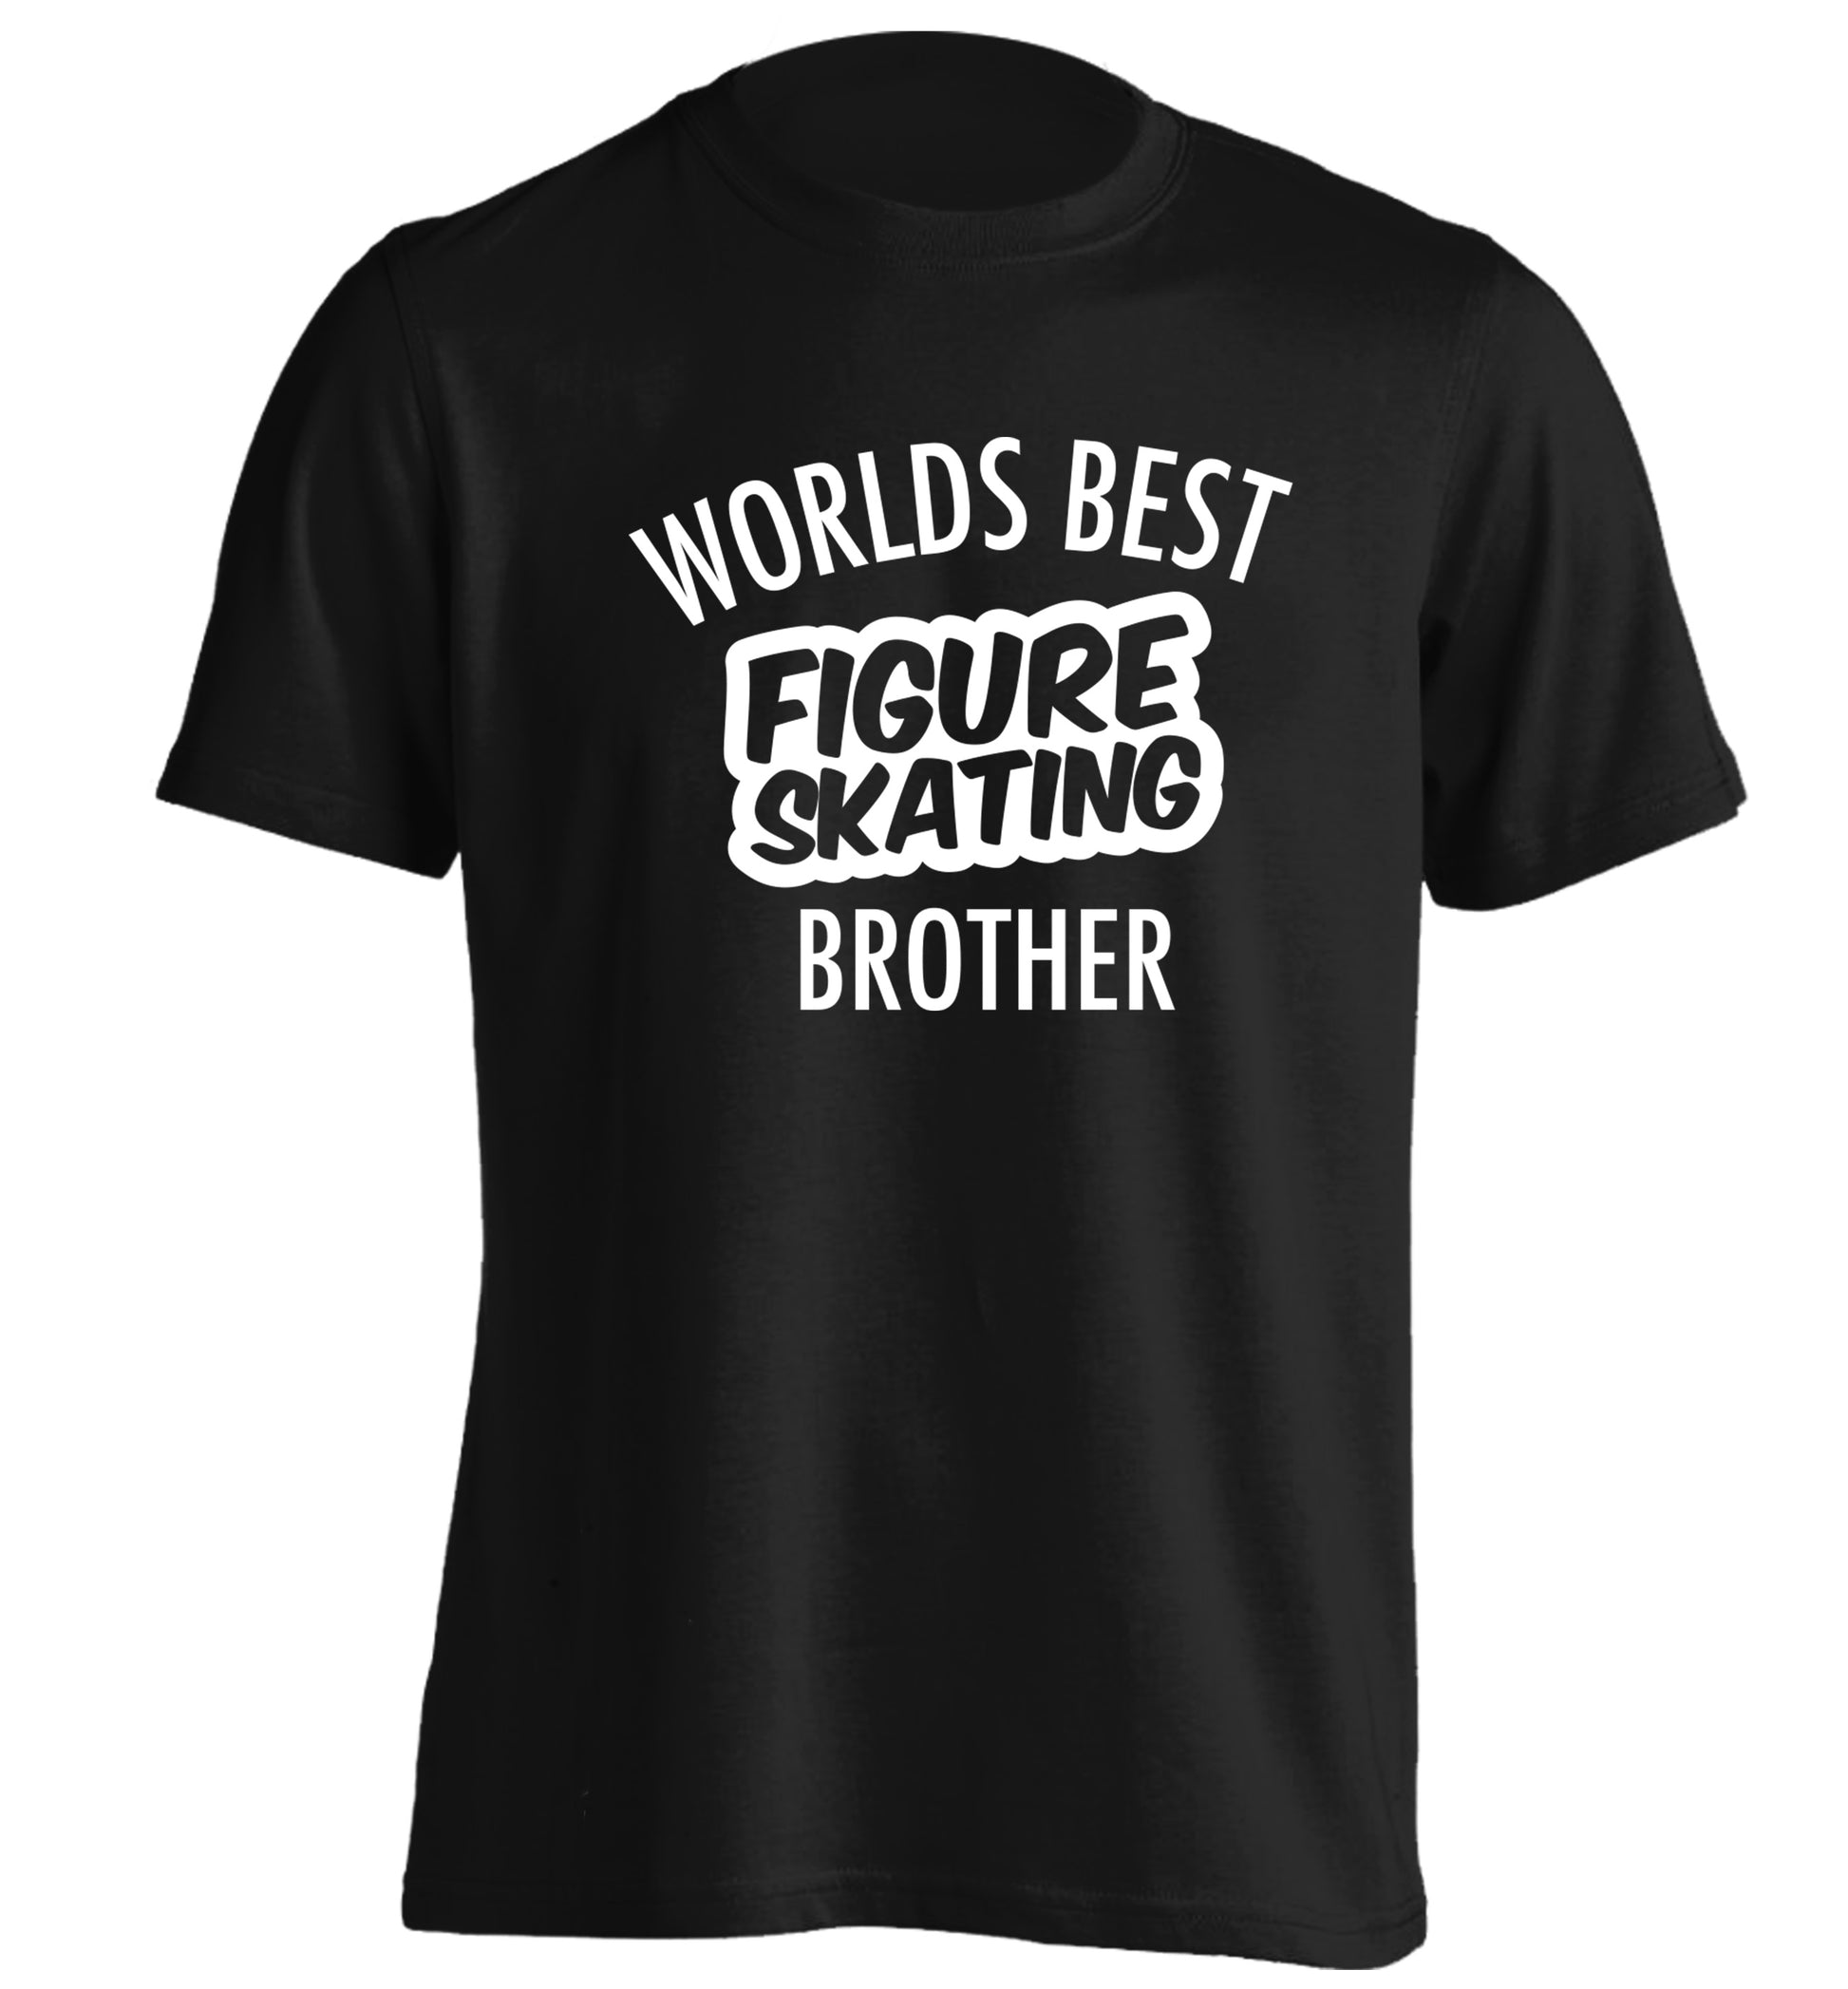 Worlds best figure skating brother adults unisexblack Tshirt 2XL